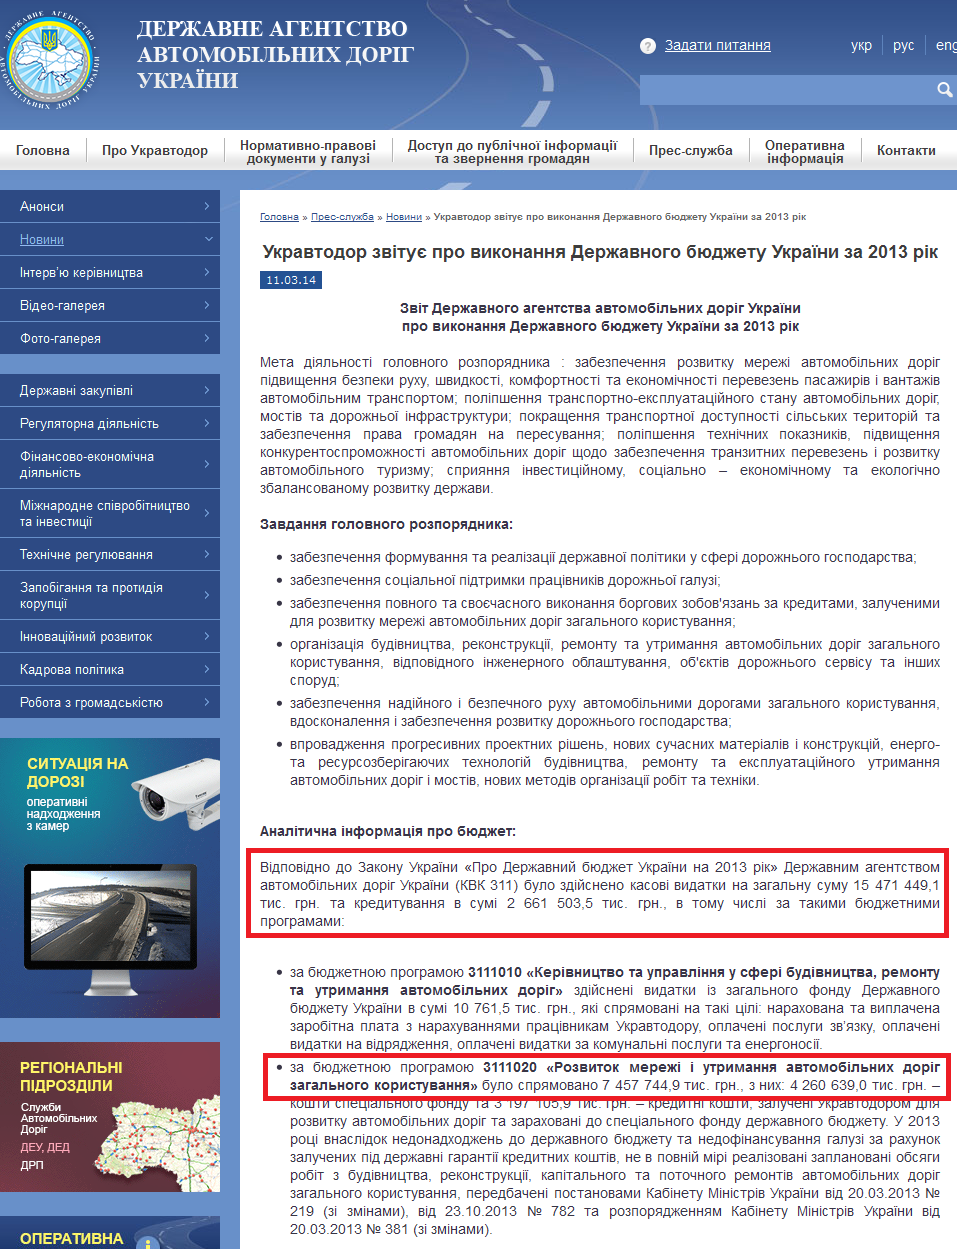 http://www.ukravtodor.gov.ua/novini/%D1%81_ukravtodor-zvitu%D1%94-pro-vikonannya-derzhavnogo-byudzhetu-ukraini-za-2013-rik.html